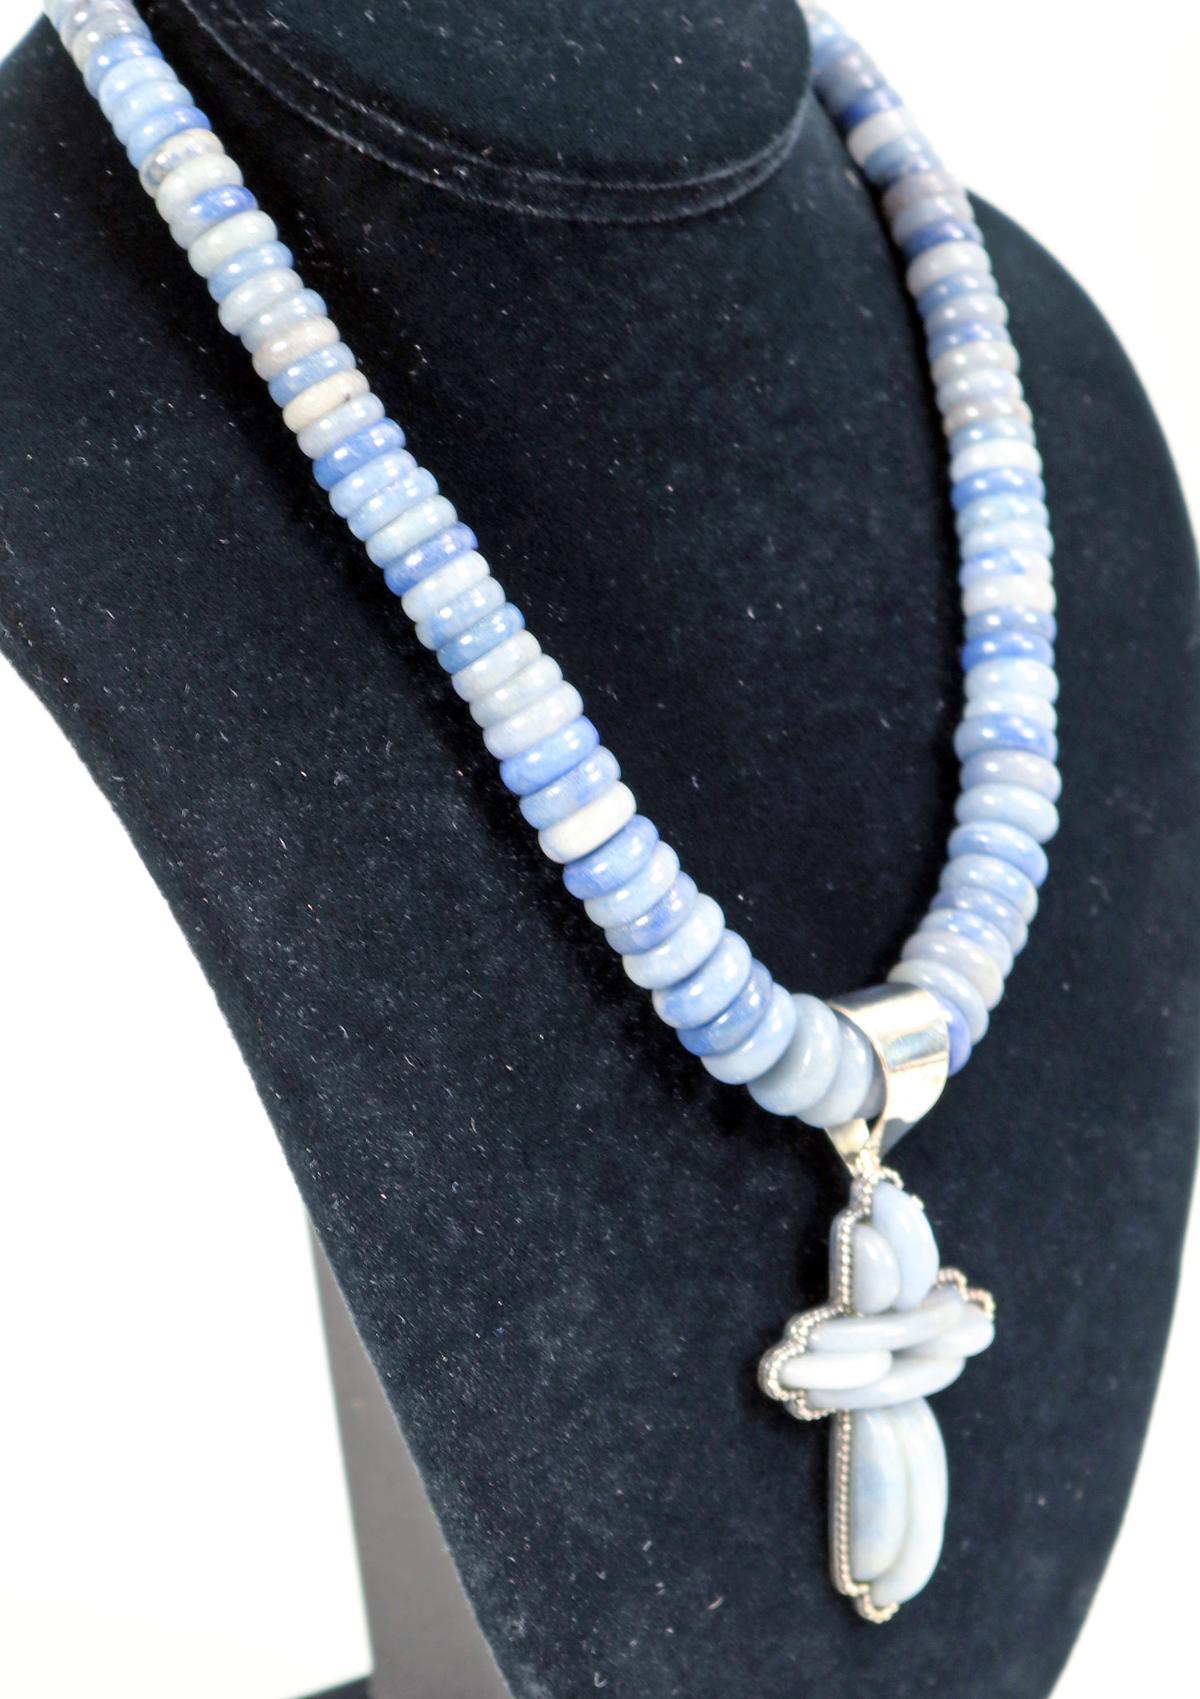 DRT Jay King Grey/Blue Gemstone (Chalcedony?) Necklace & Cross Pendant